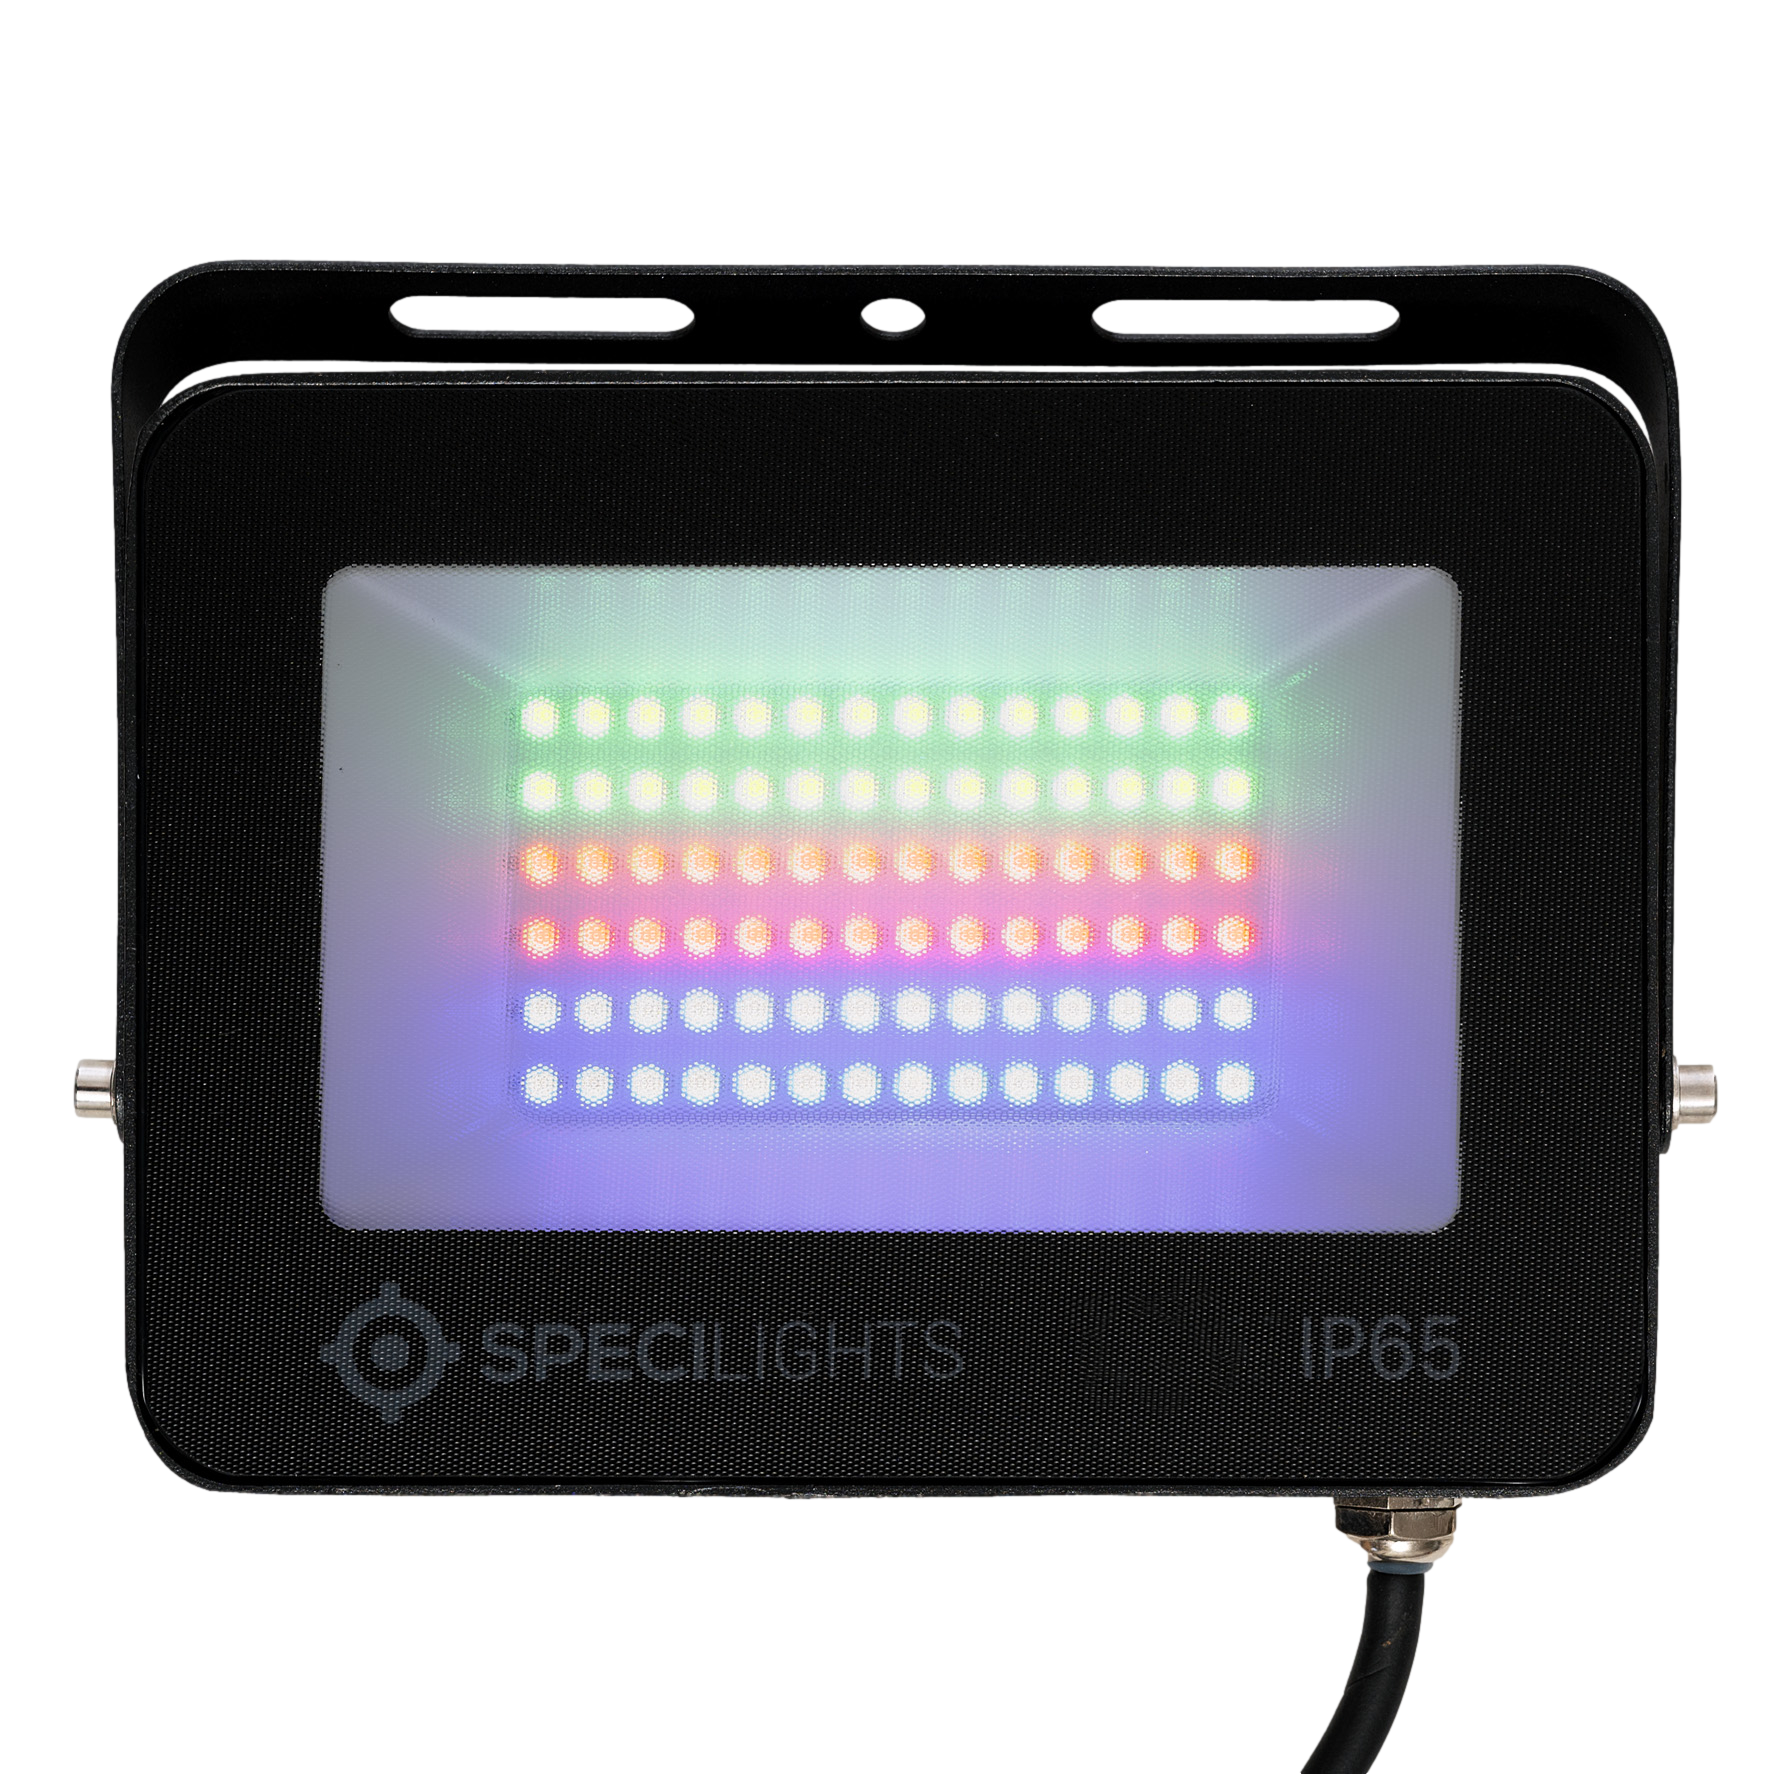 LED Bouwlamp 15W RGB kopen? Bestel online LedlampshopXL